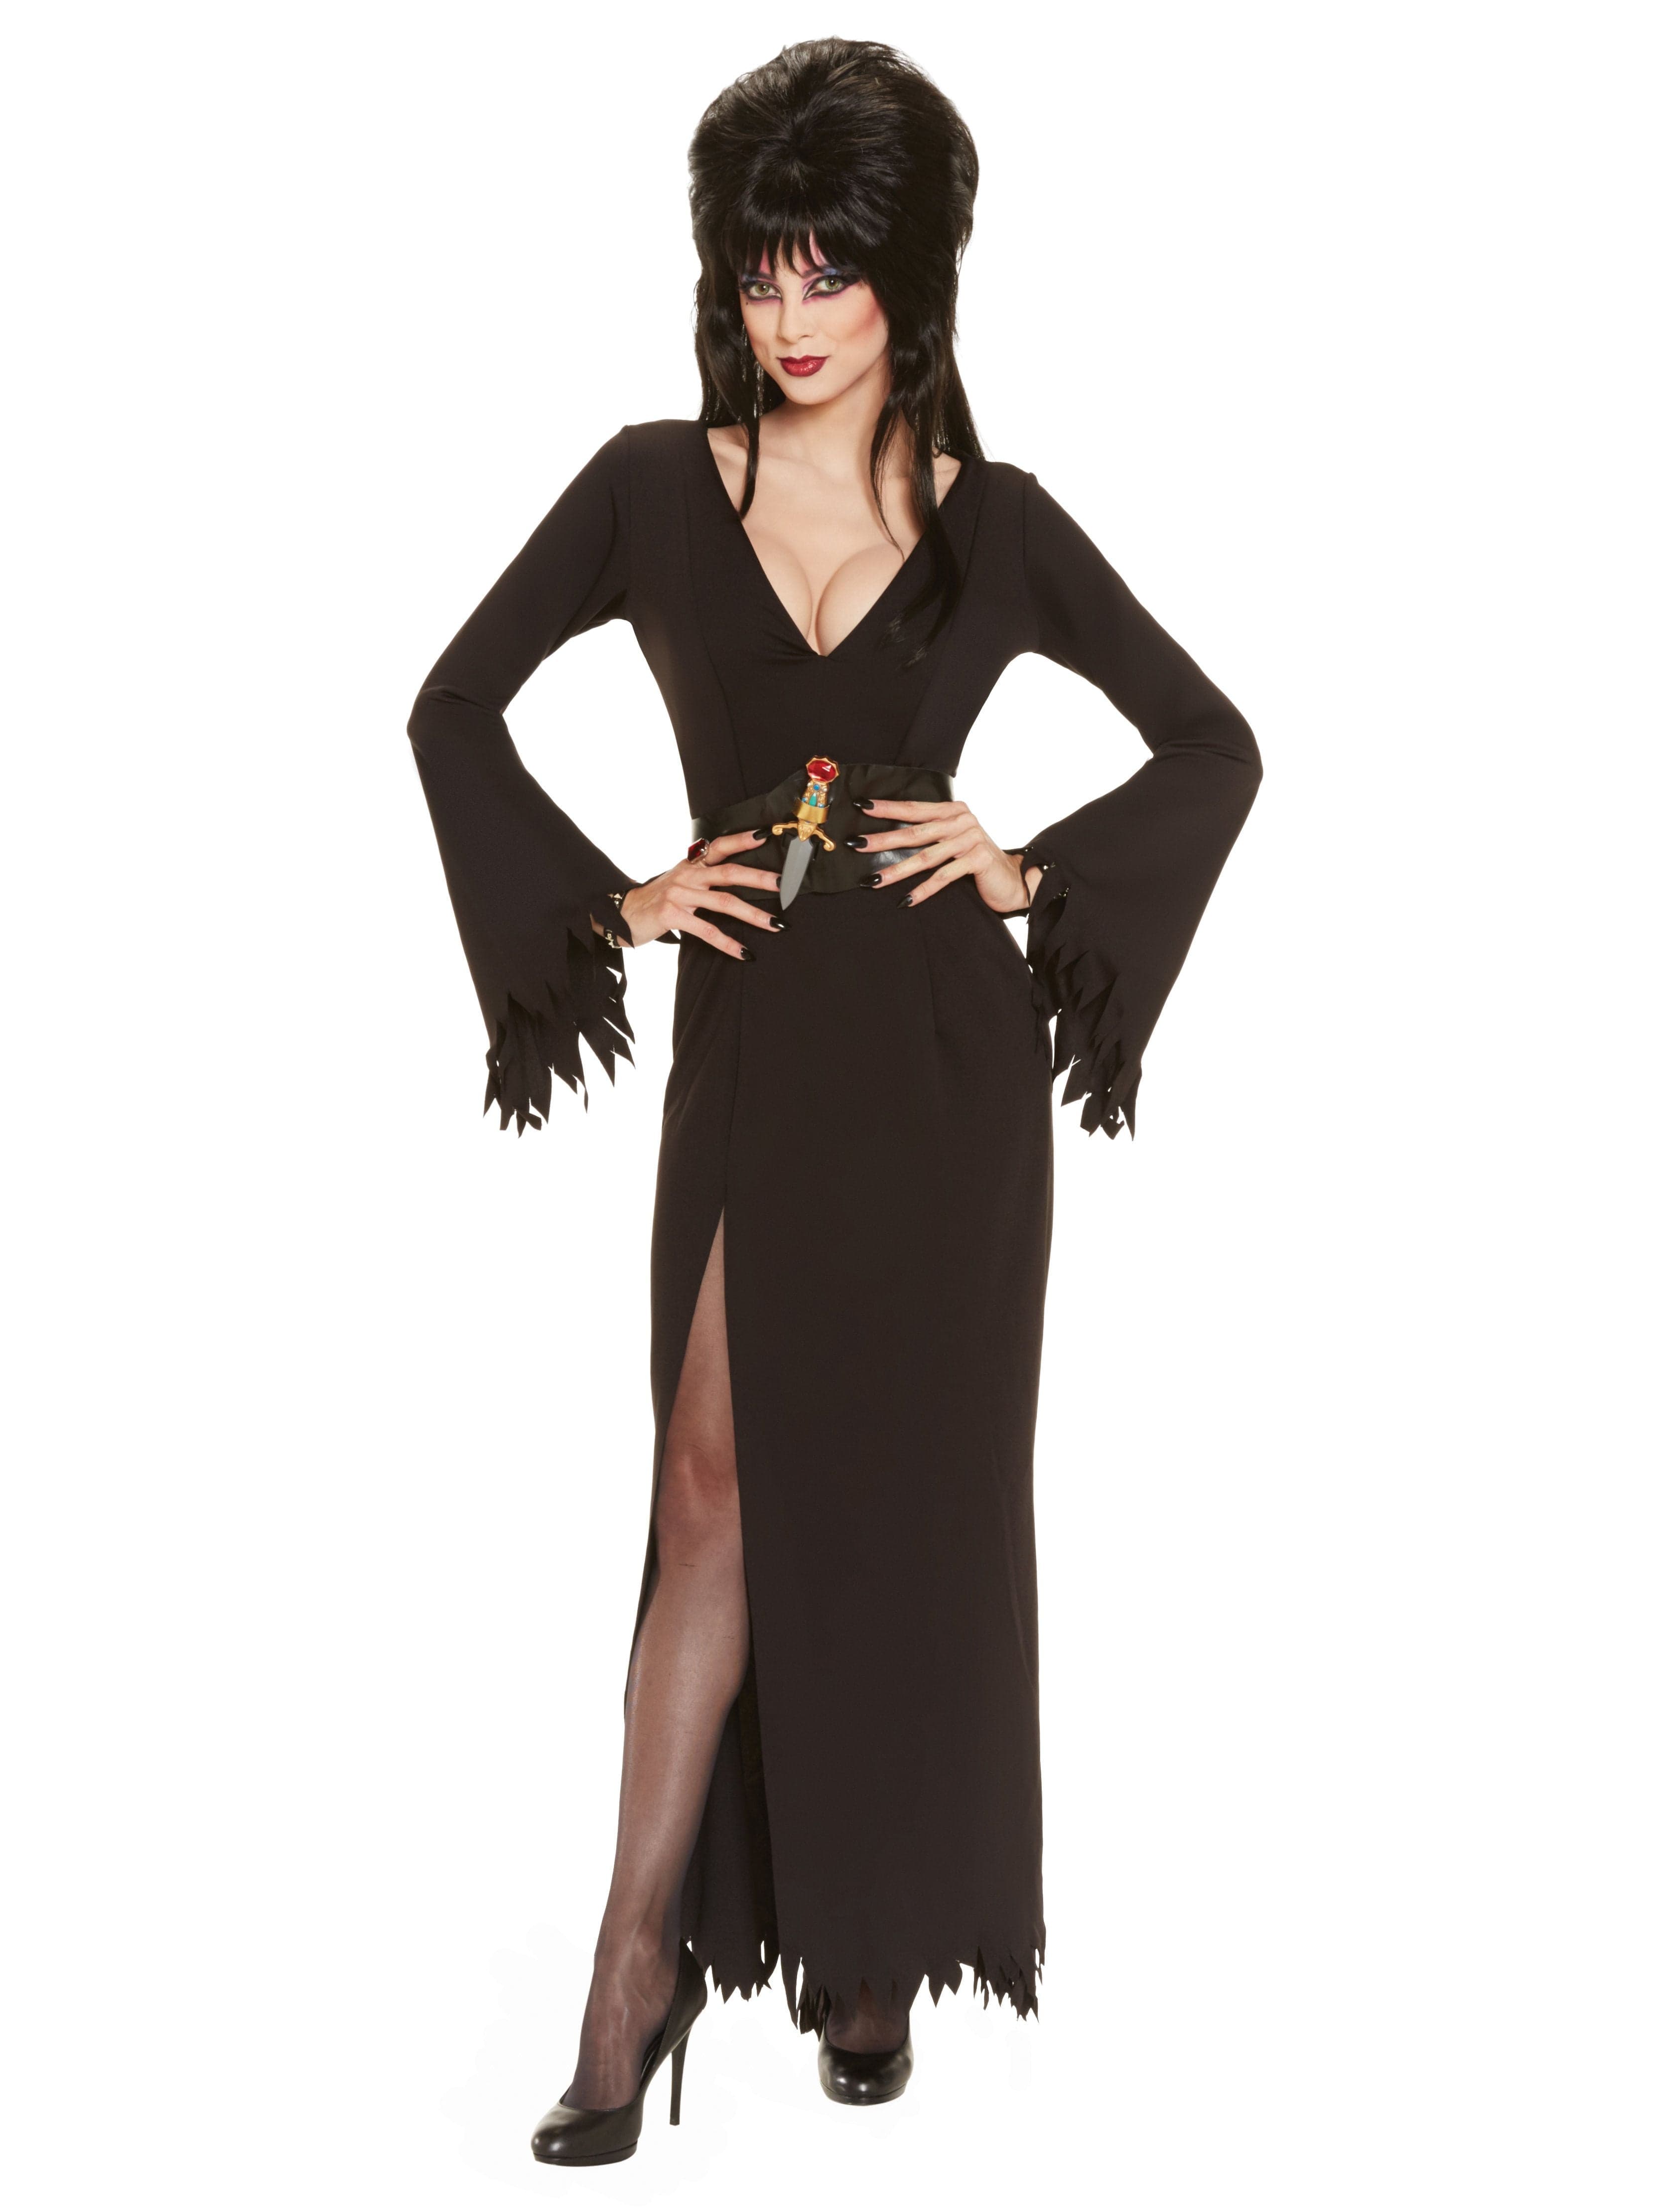 Adult Elvira Costume - costumes.com